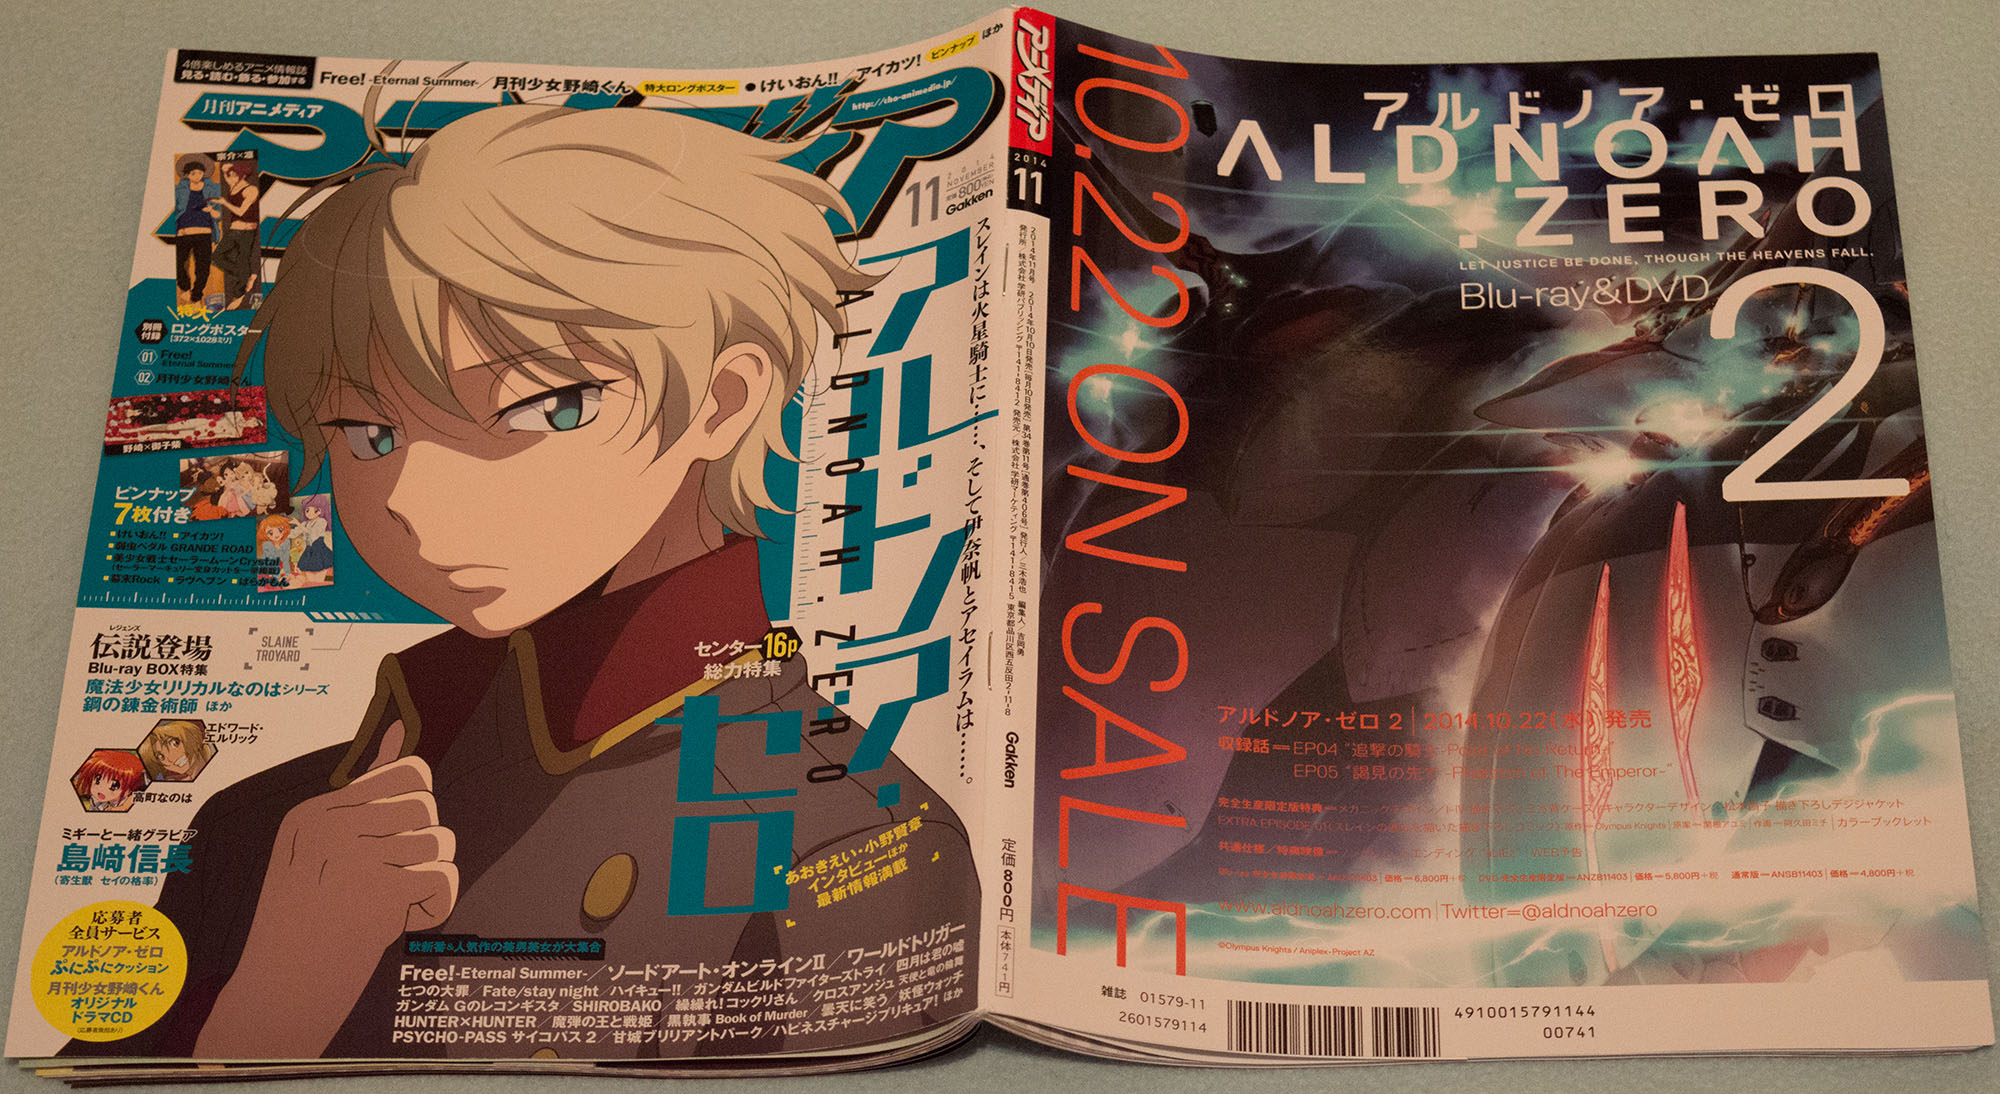 Aldnoah.Zero 2nd Season  Manga, Manga covers, Seasons